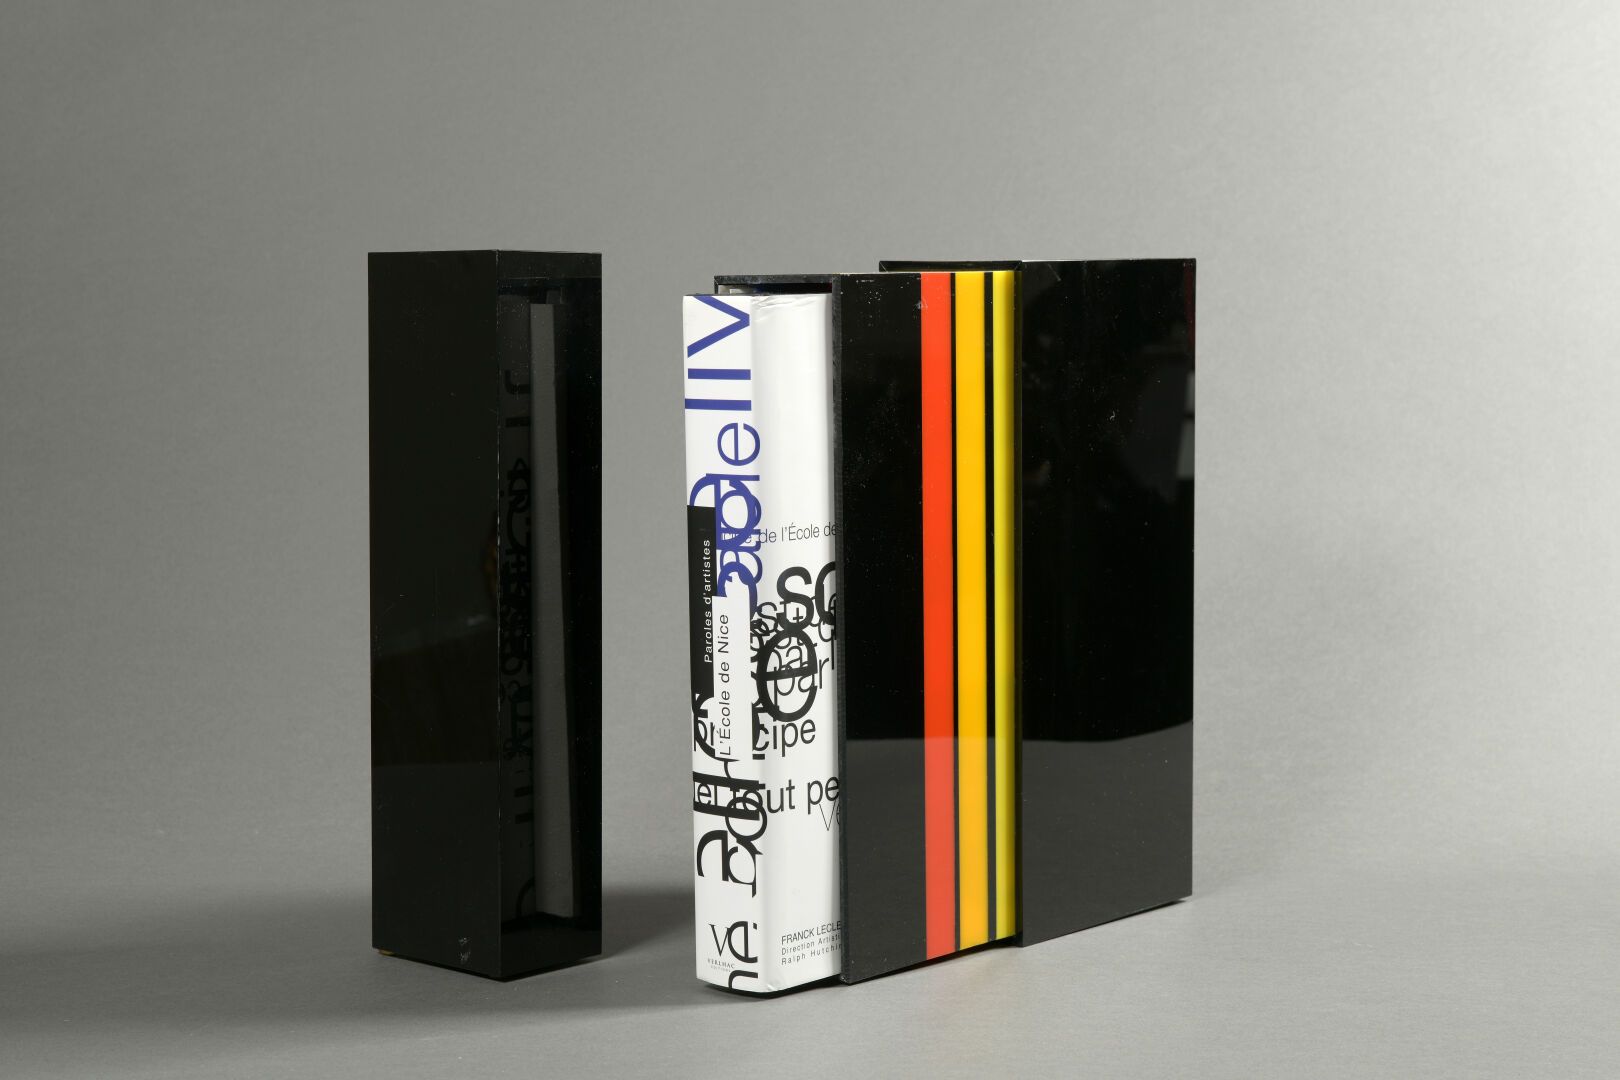 Null 让-克洛德-法西（1940-2012 年）
原装黑色有机玻璃矩形盒，红、橙、黄条纹交替出现 
已签名并编号 23/28
27 x 33 x 10 厘米&hellip;